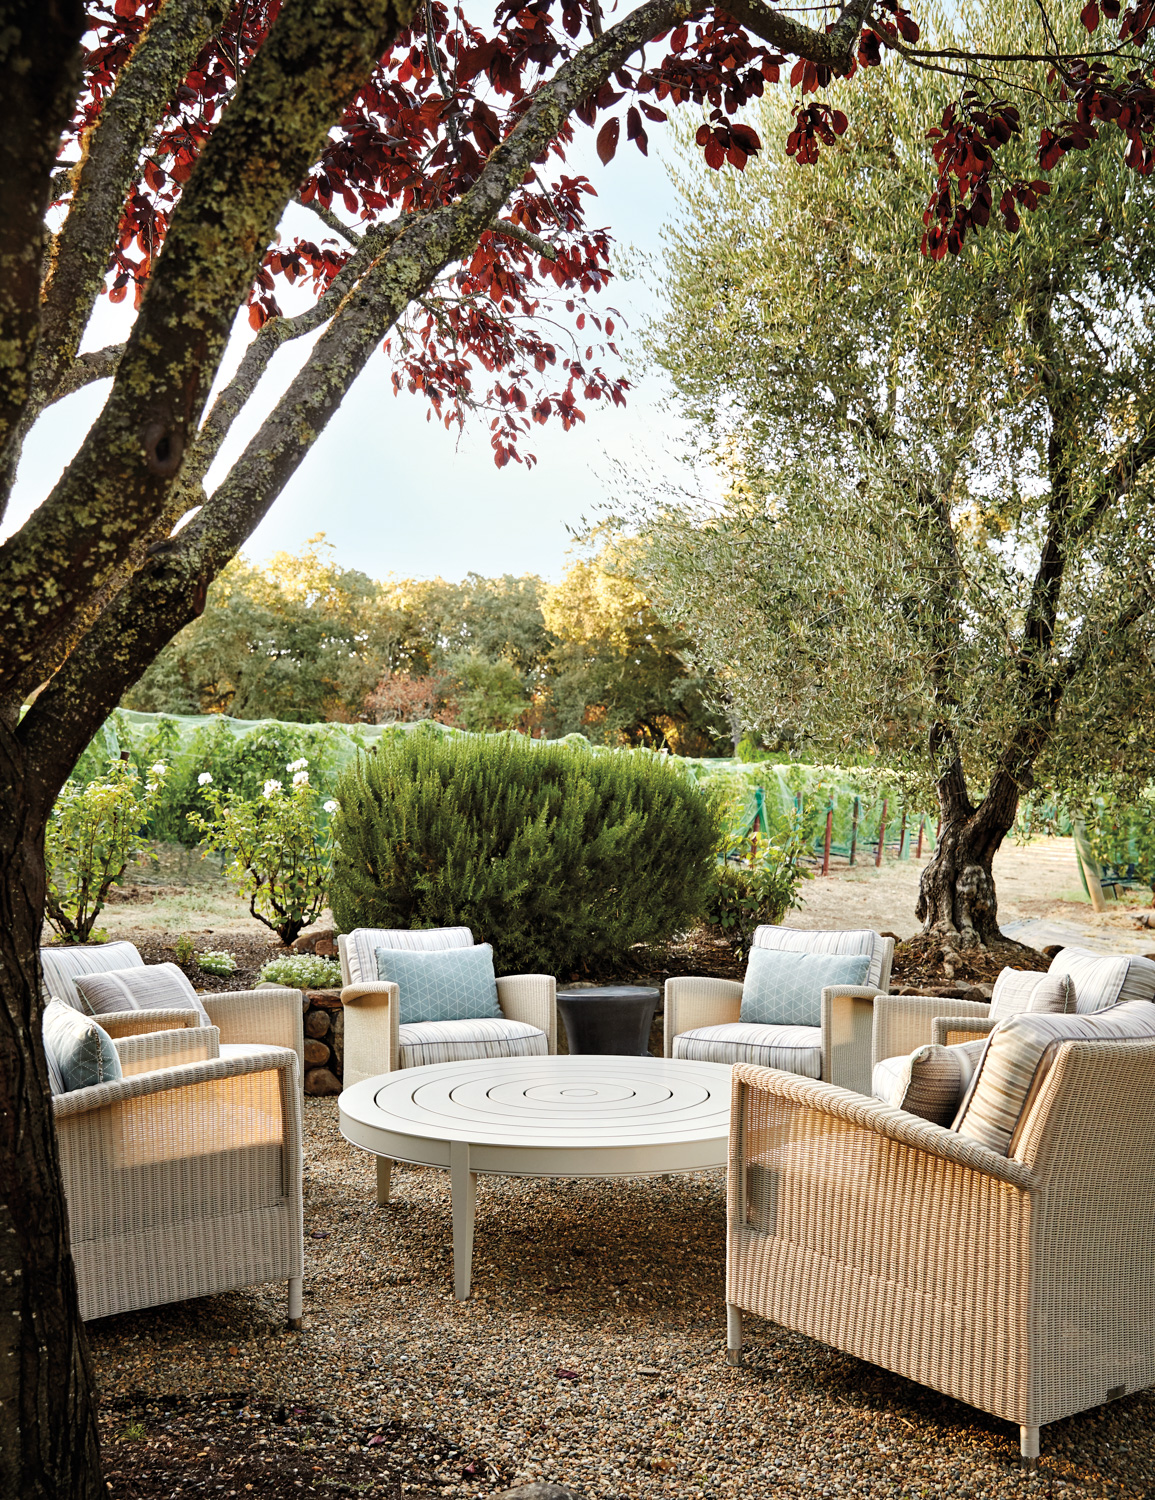 An outdoor sitting area overlooks a vineyard.